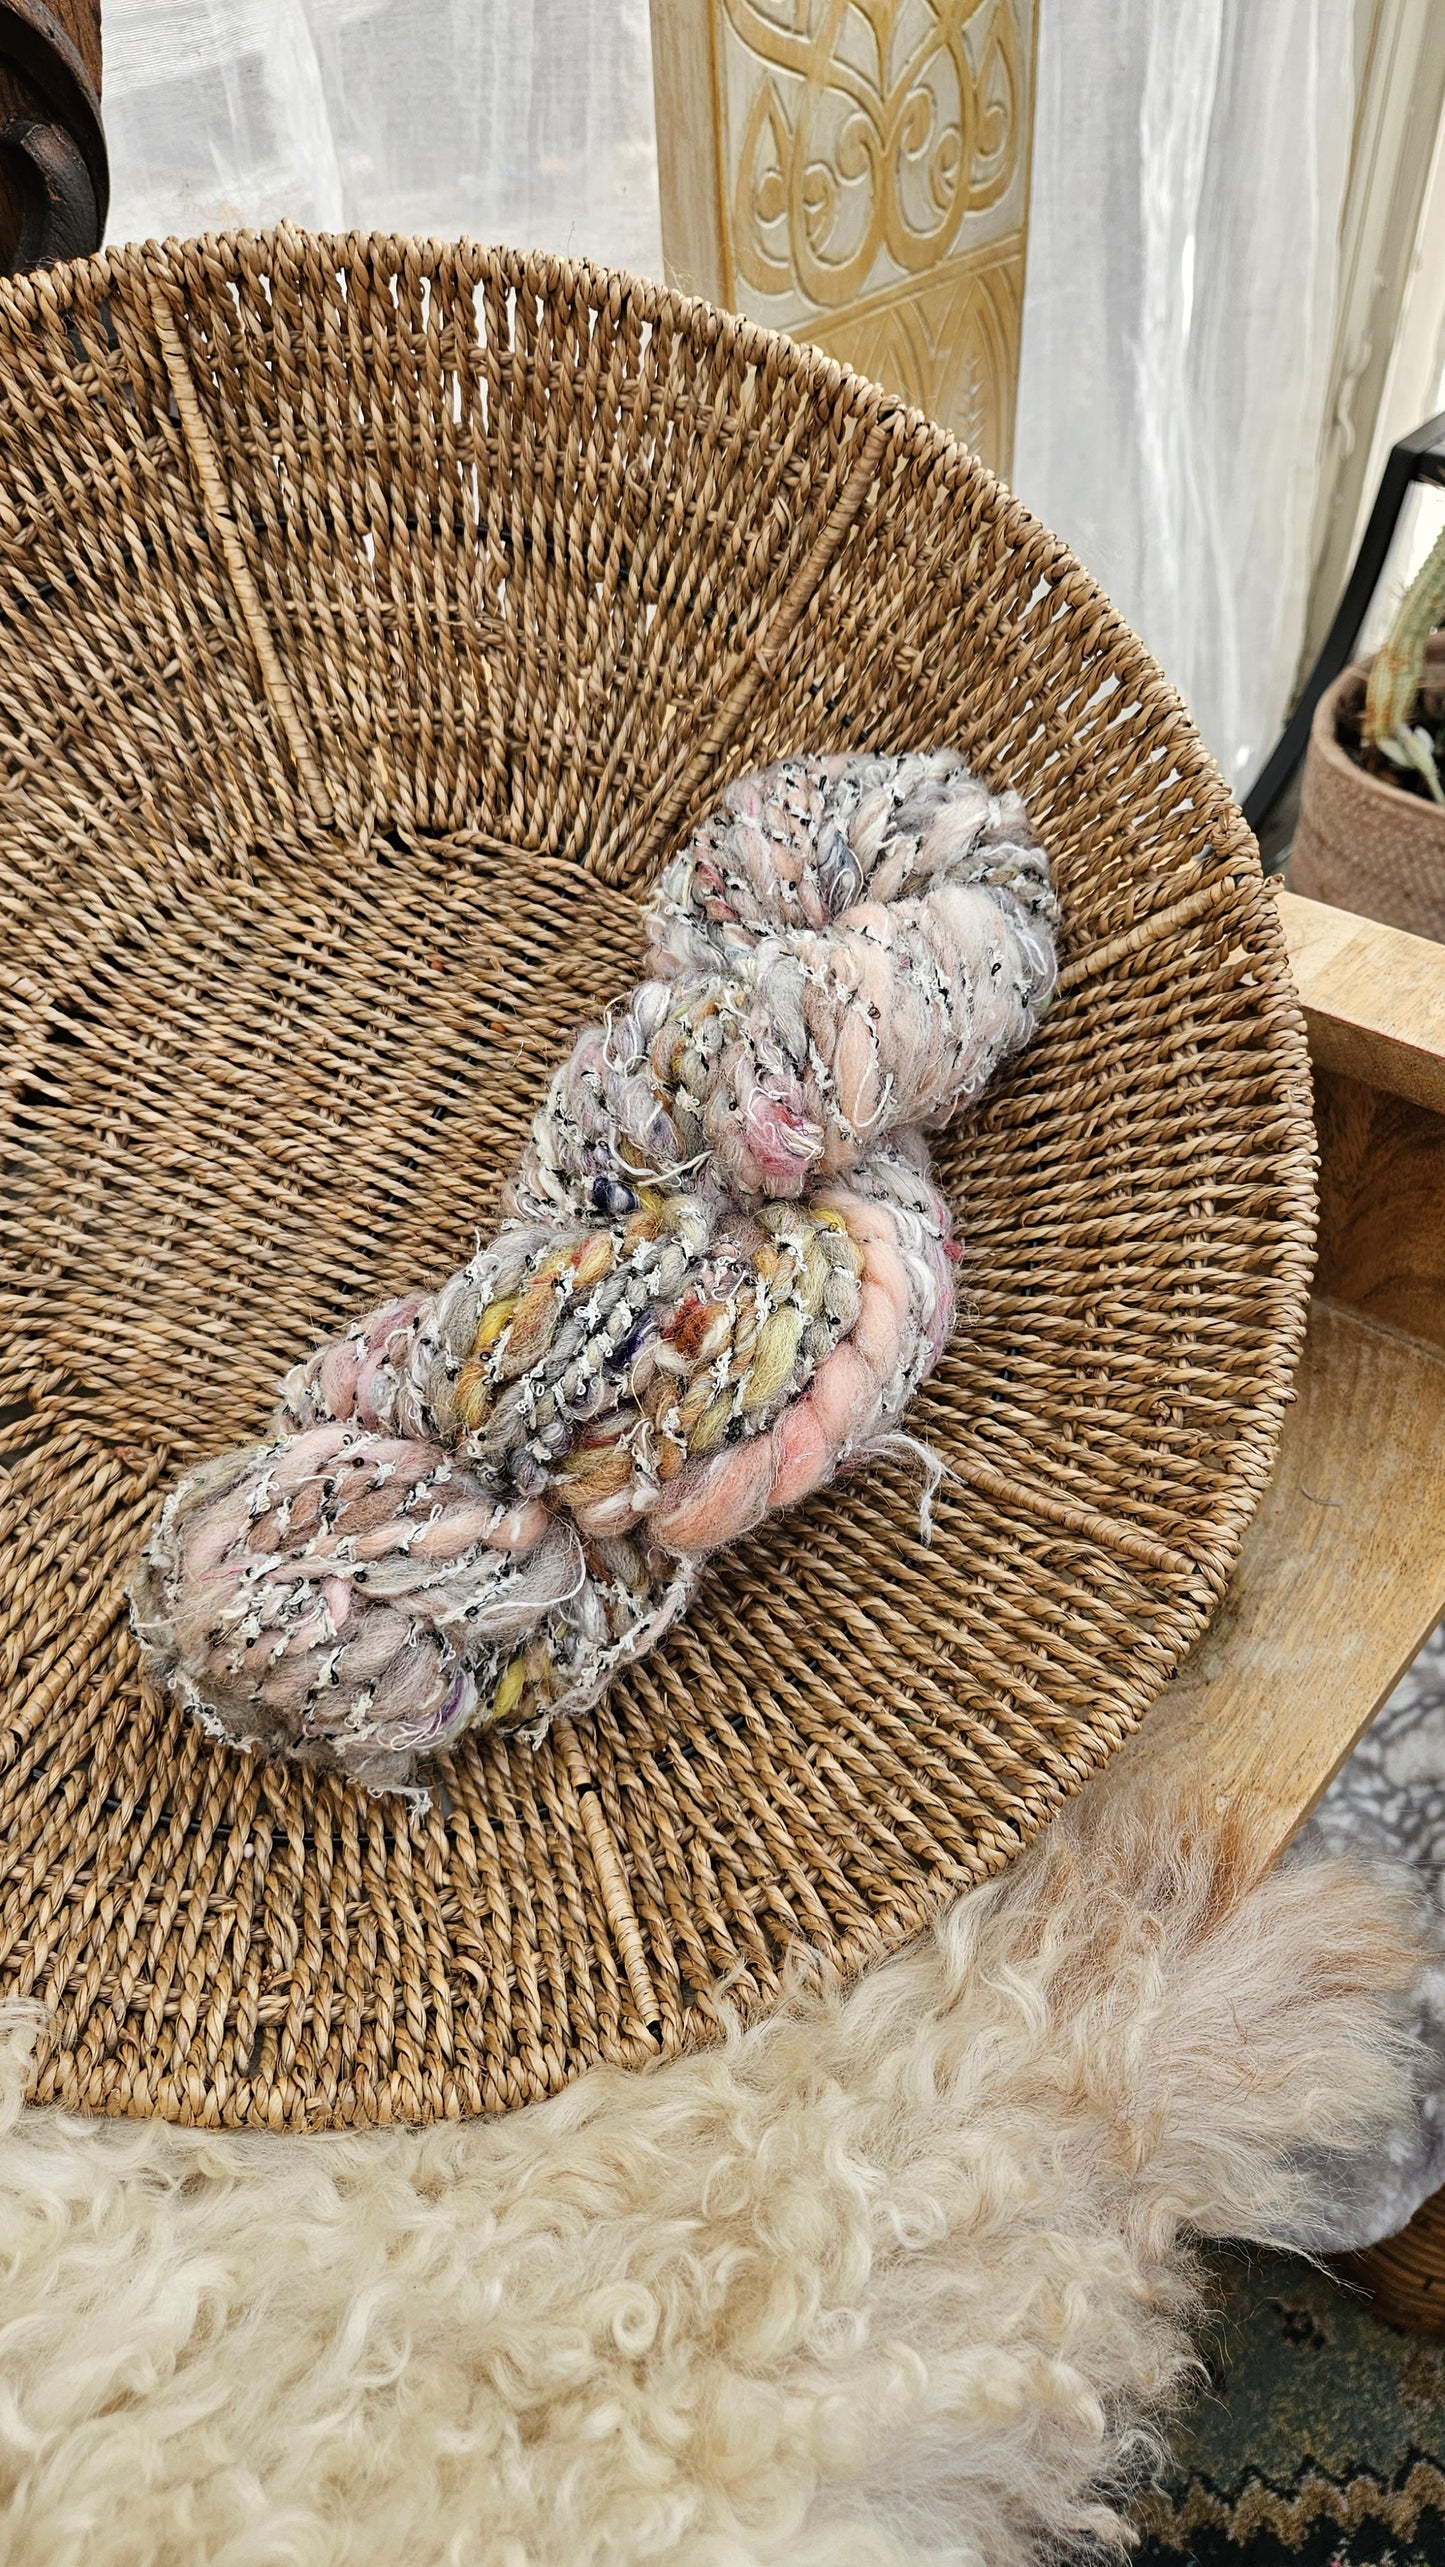 BELOVED TEDDY - Handspun Bulky Wool Textured Art Yarn - 45 Yards 3.2 oz